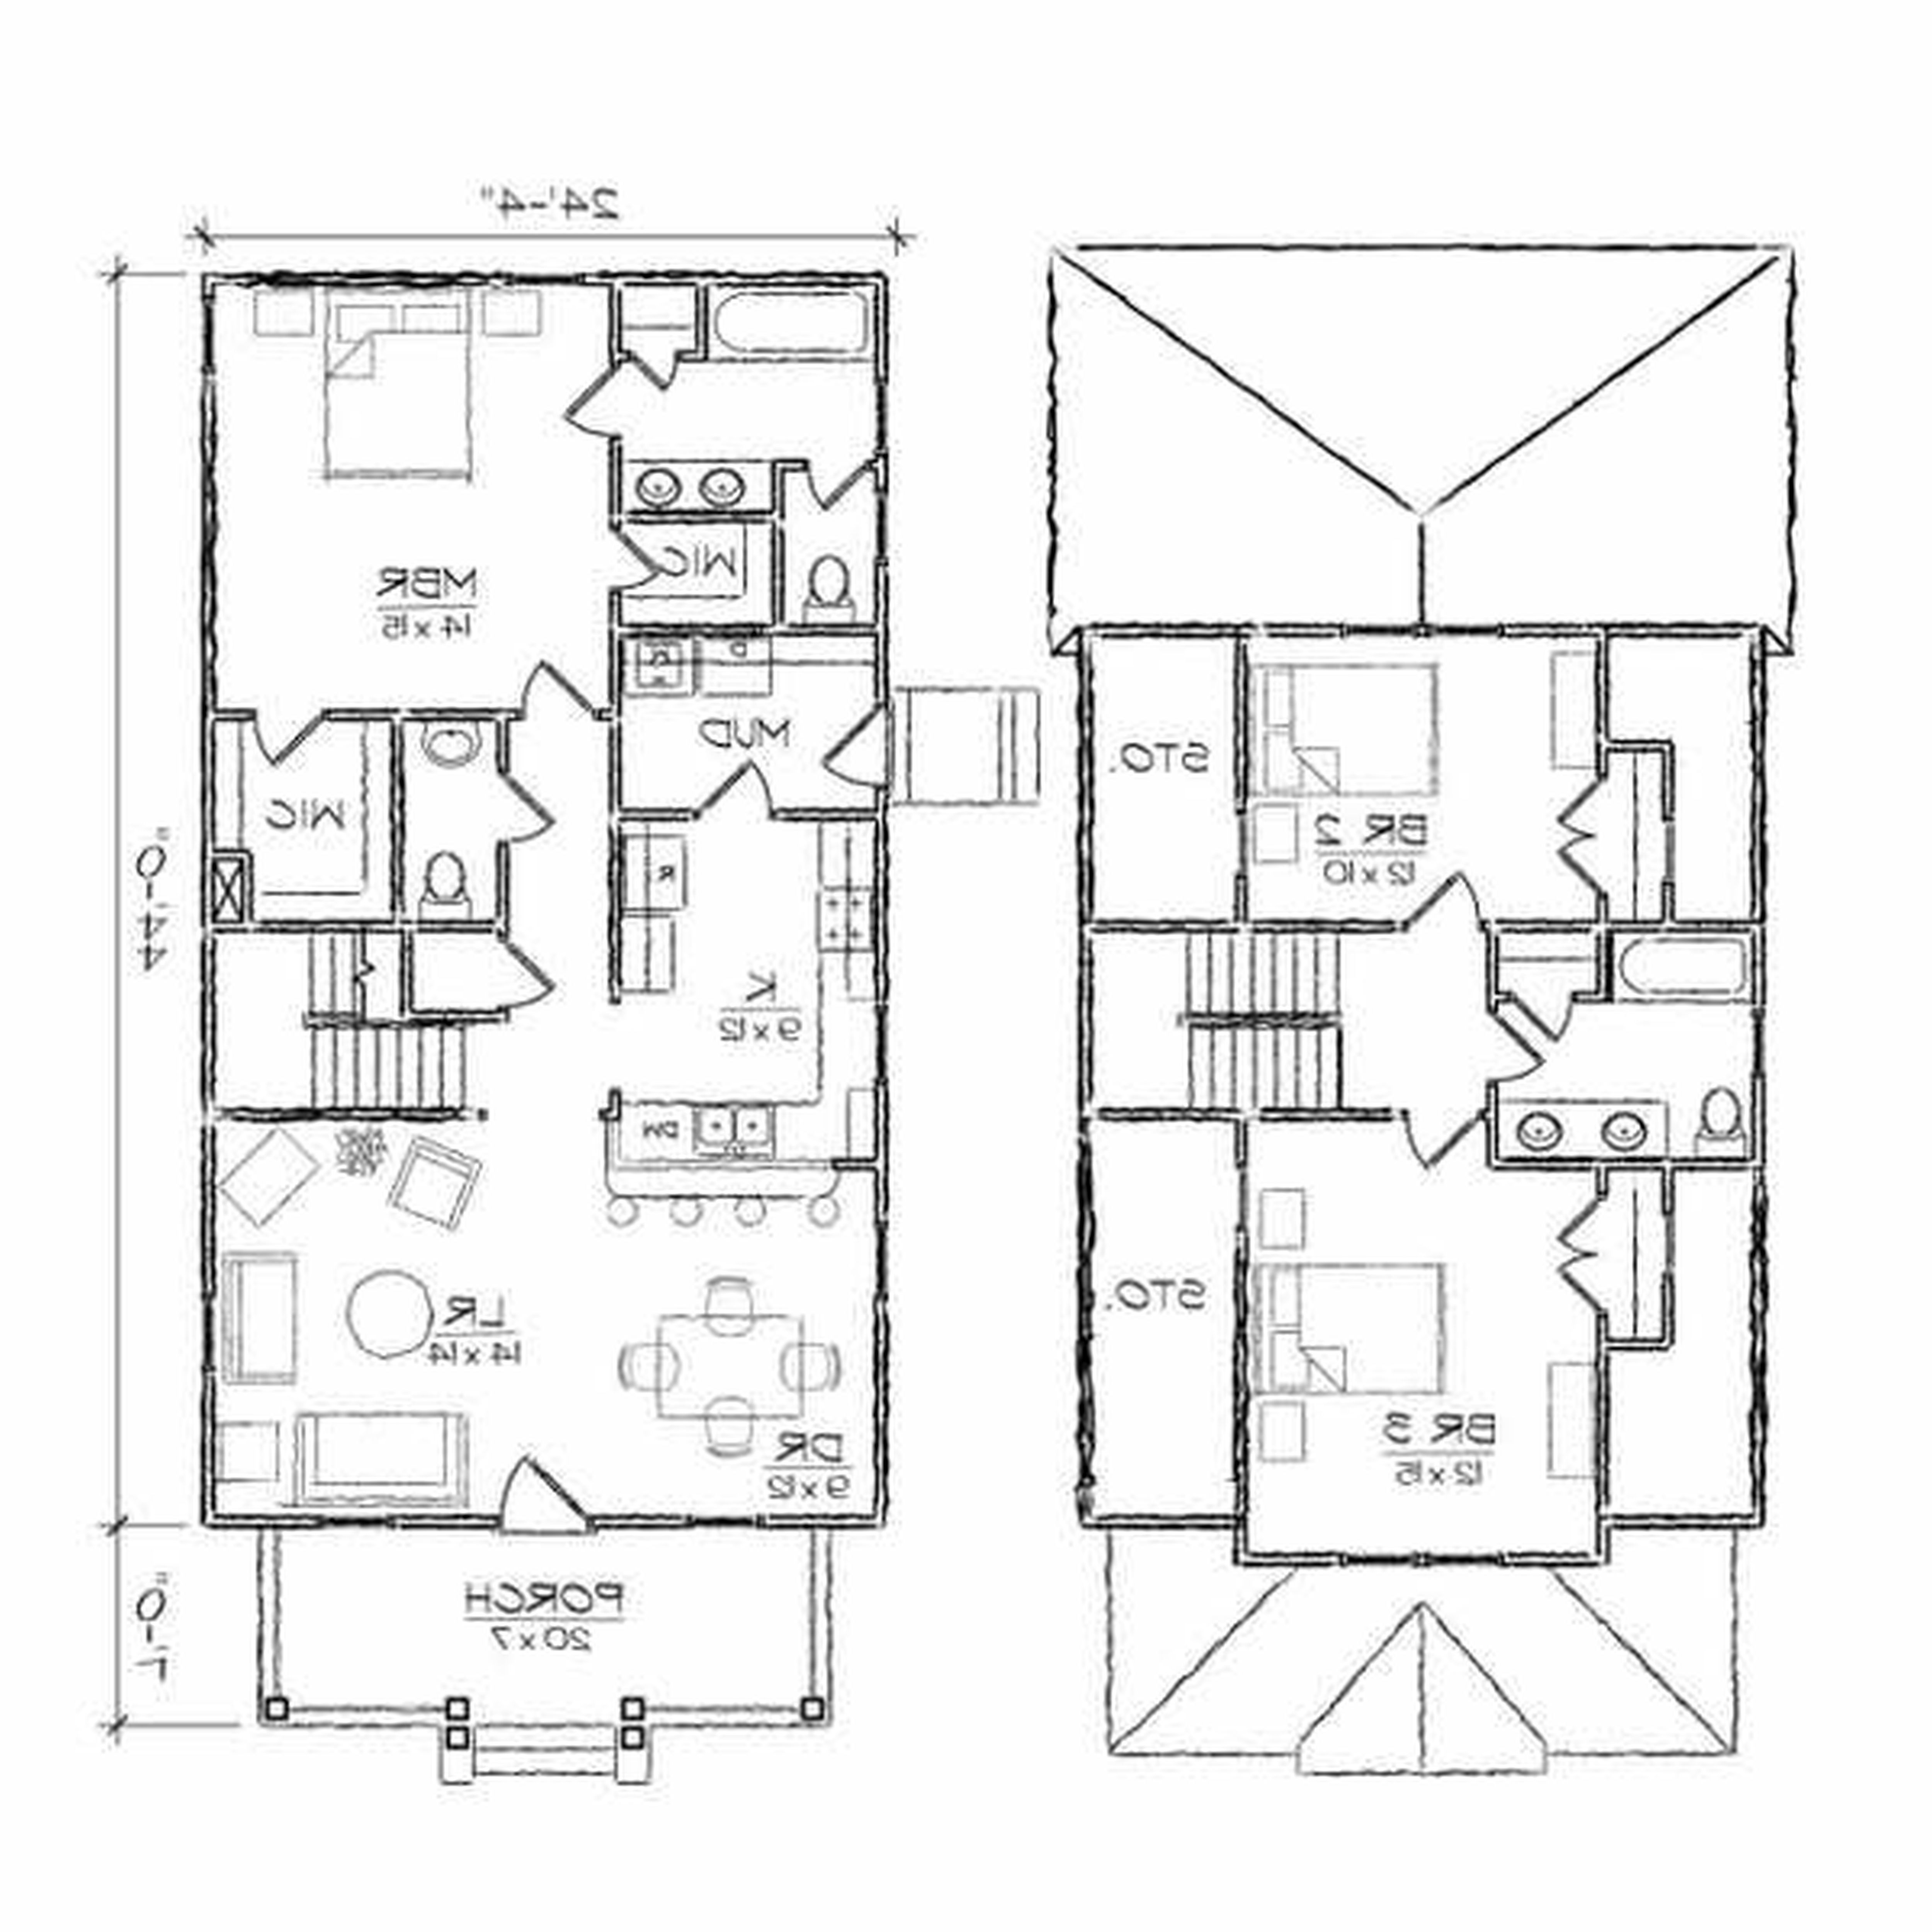 ipad app drawing house plans